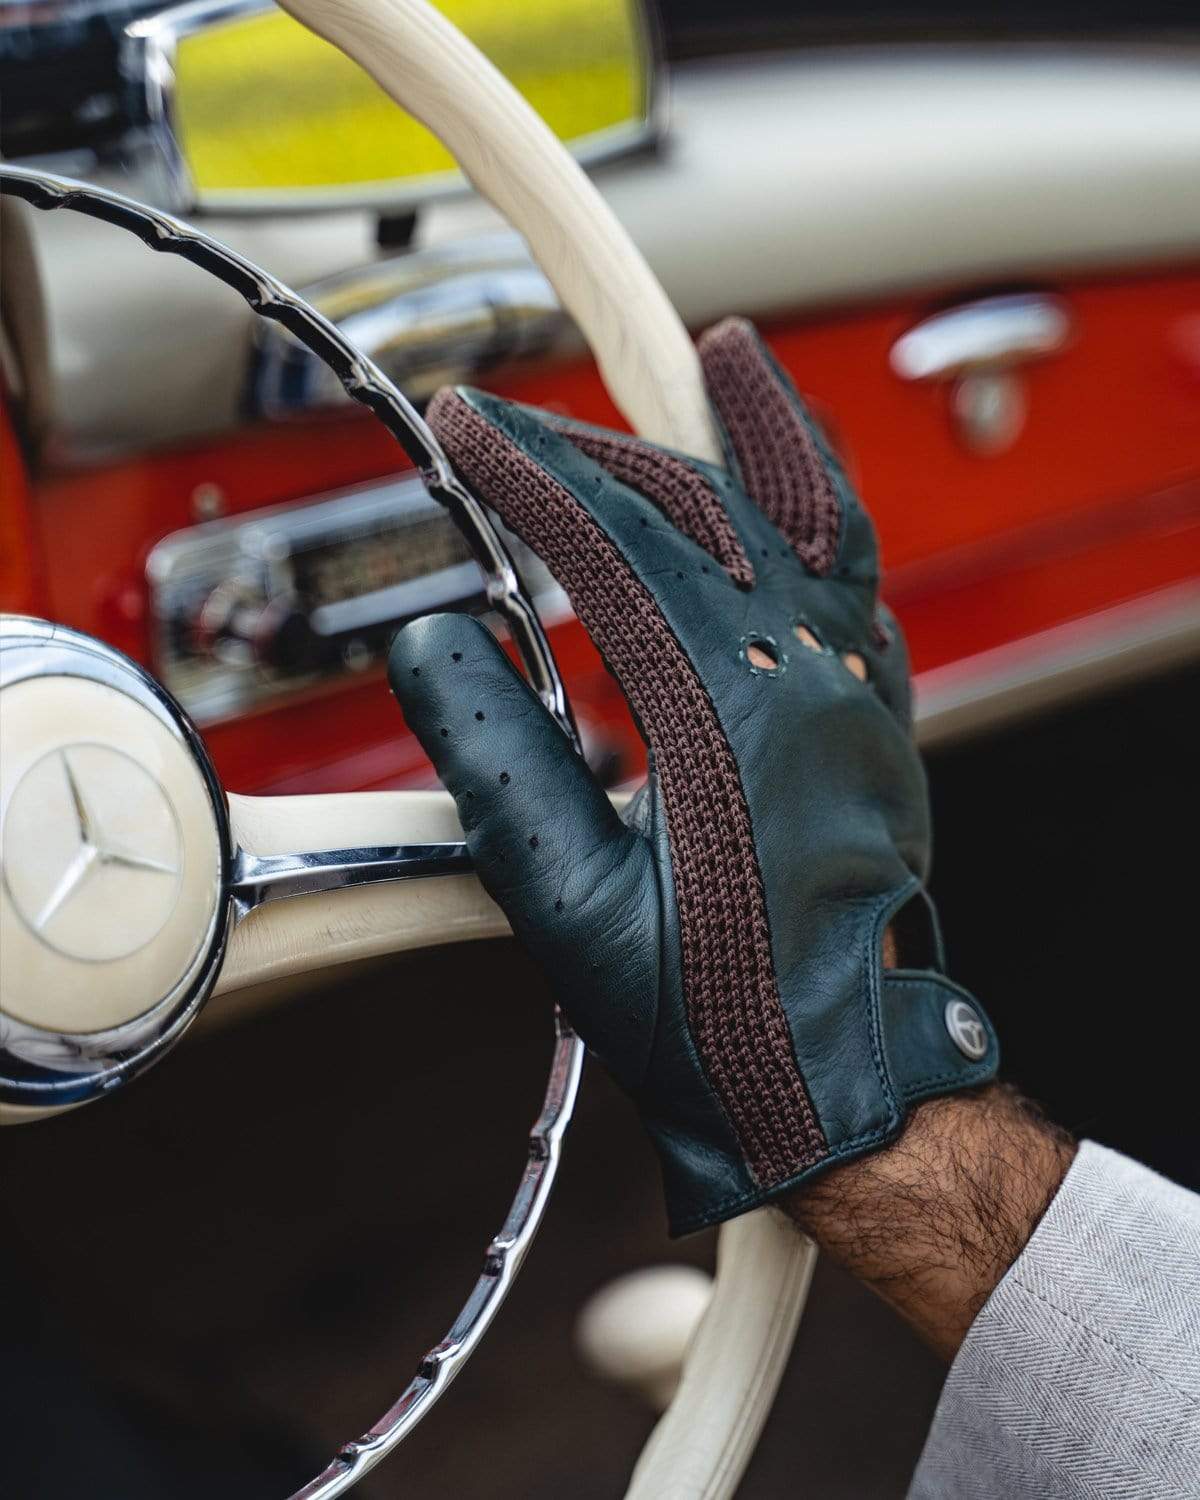 Men's Fingerless Leather Driving Gloves, British Racing Green / L